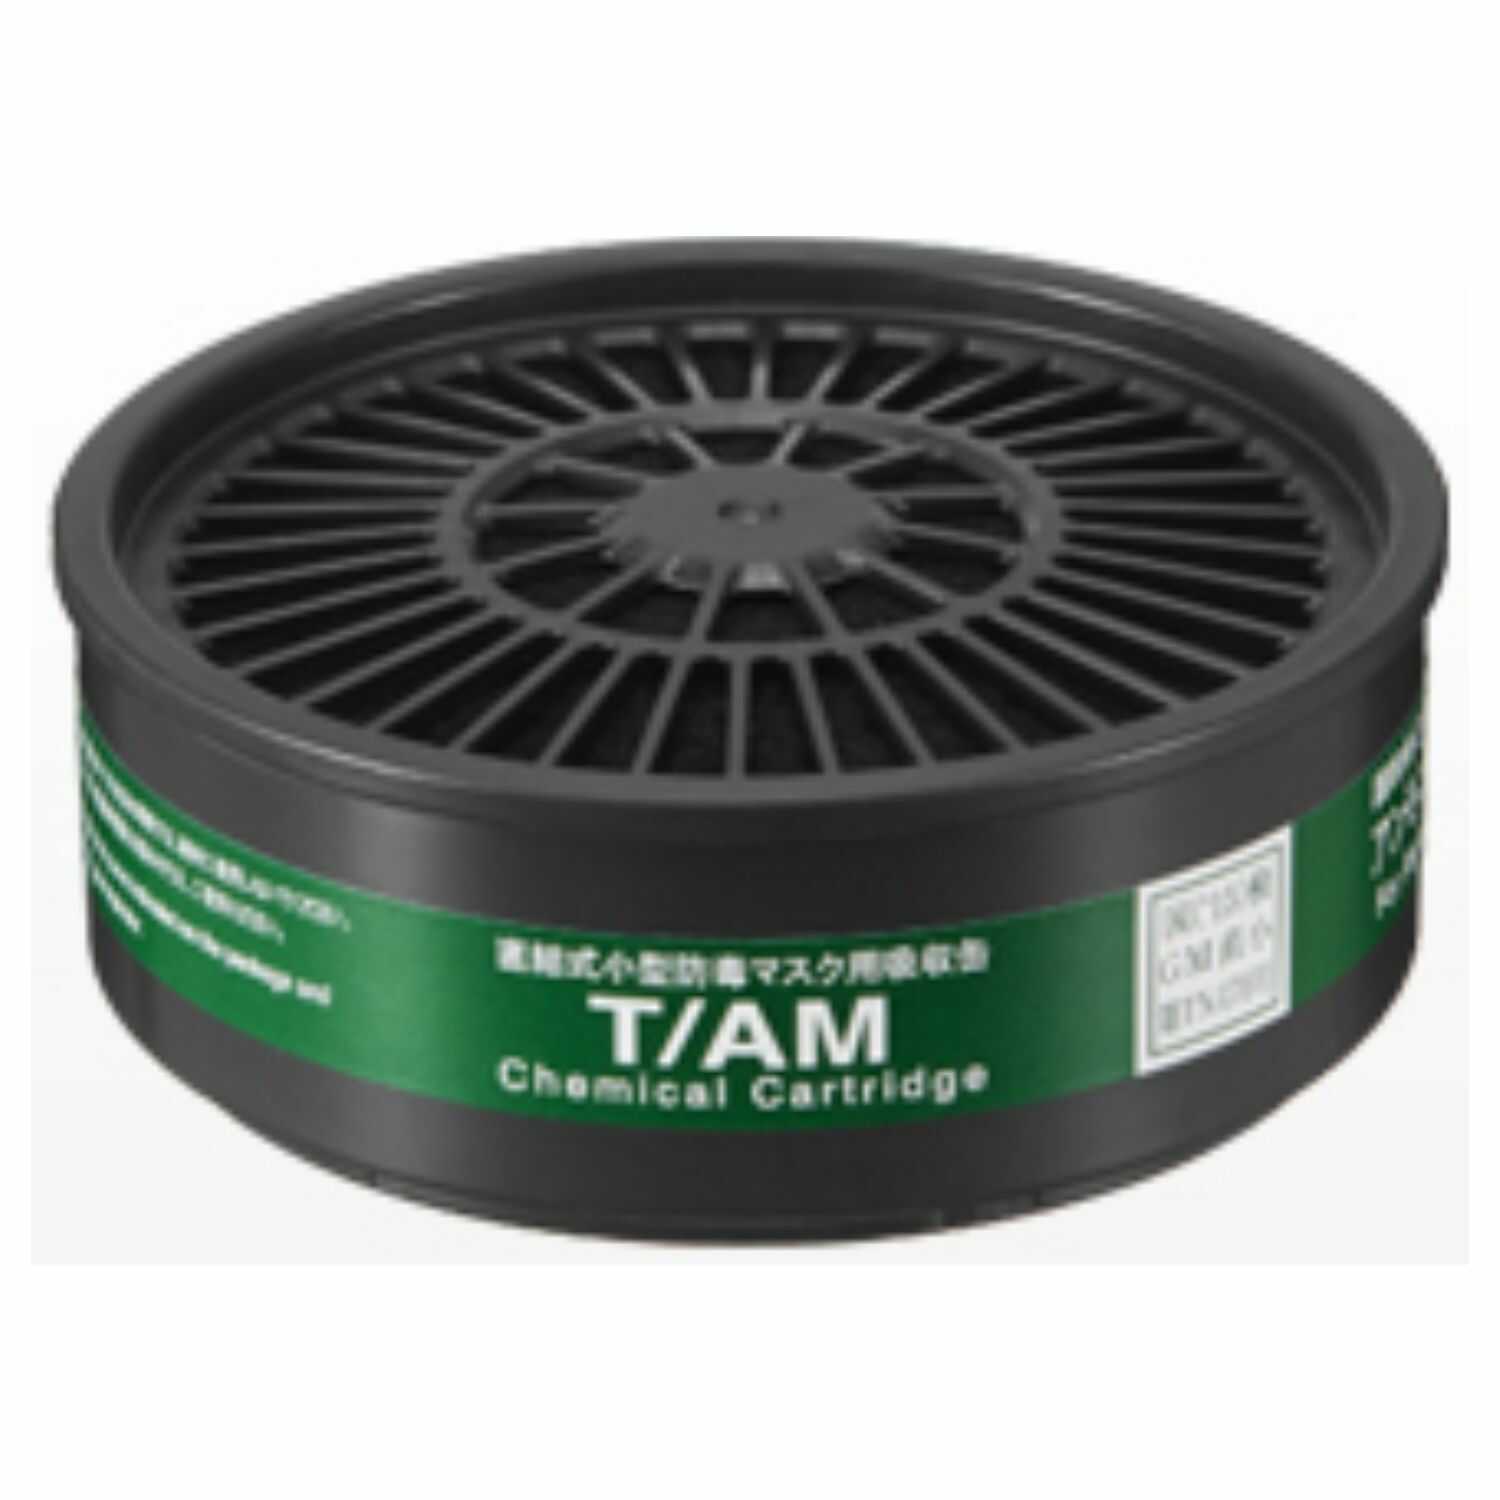 SHIGEMATSU T/AM Ammonia Gas Filter Cartridge , Black/Green, TW Series, 12343 (Pack of 1)